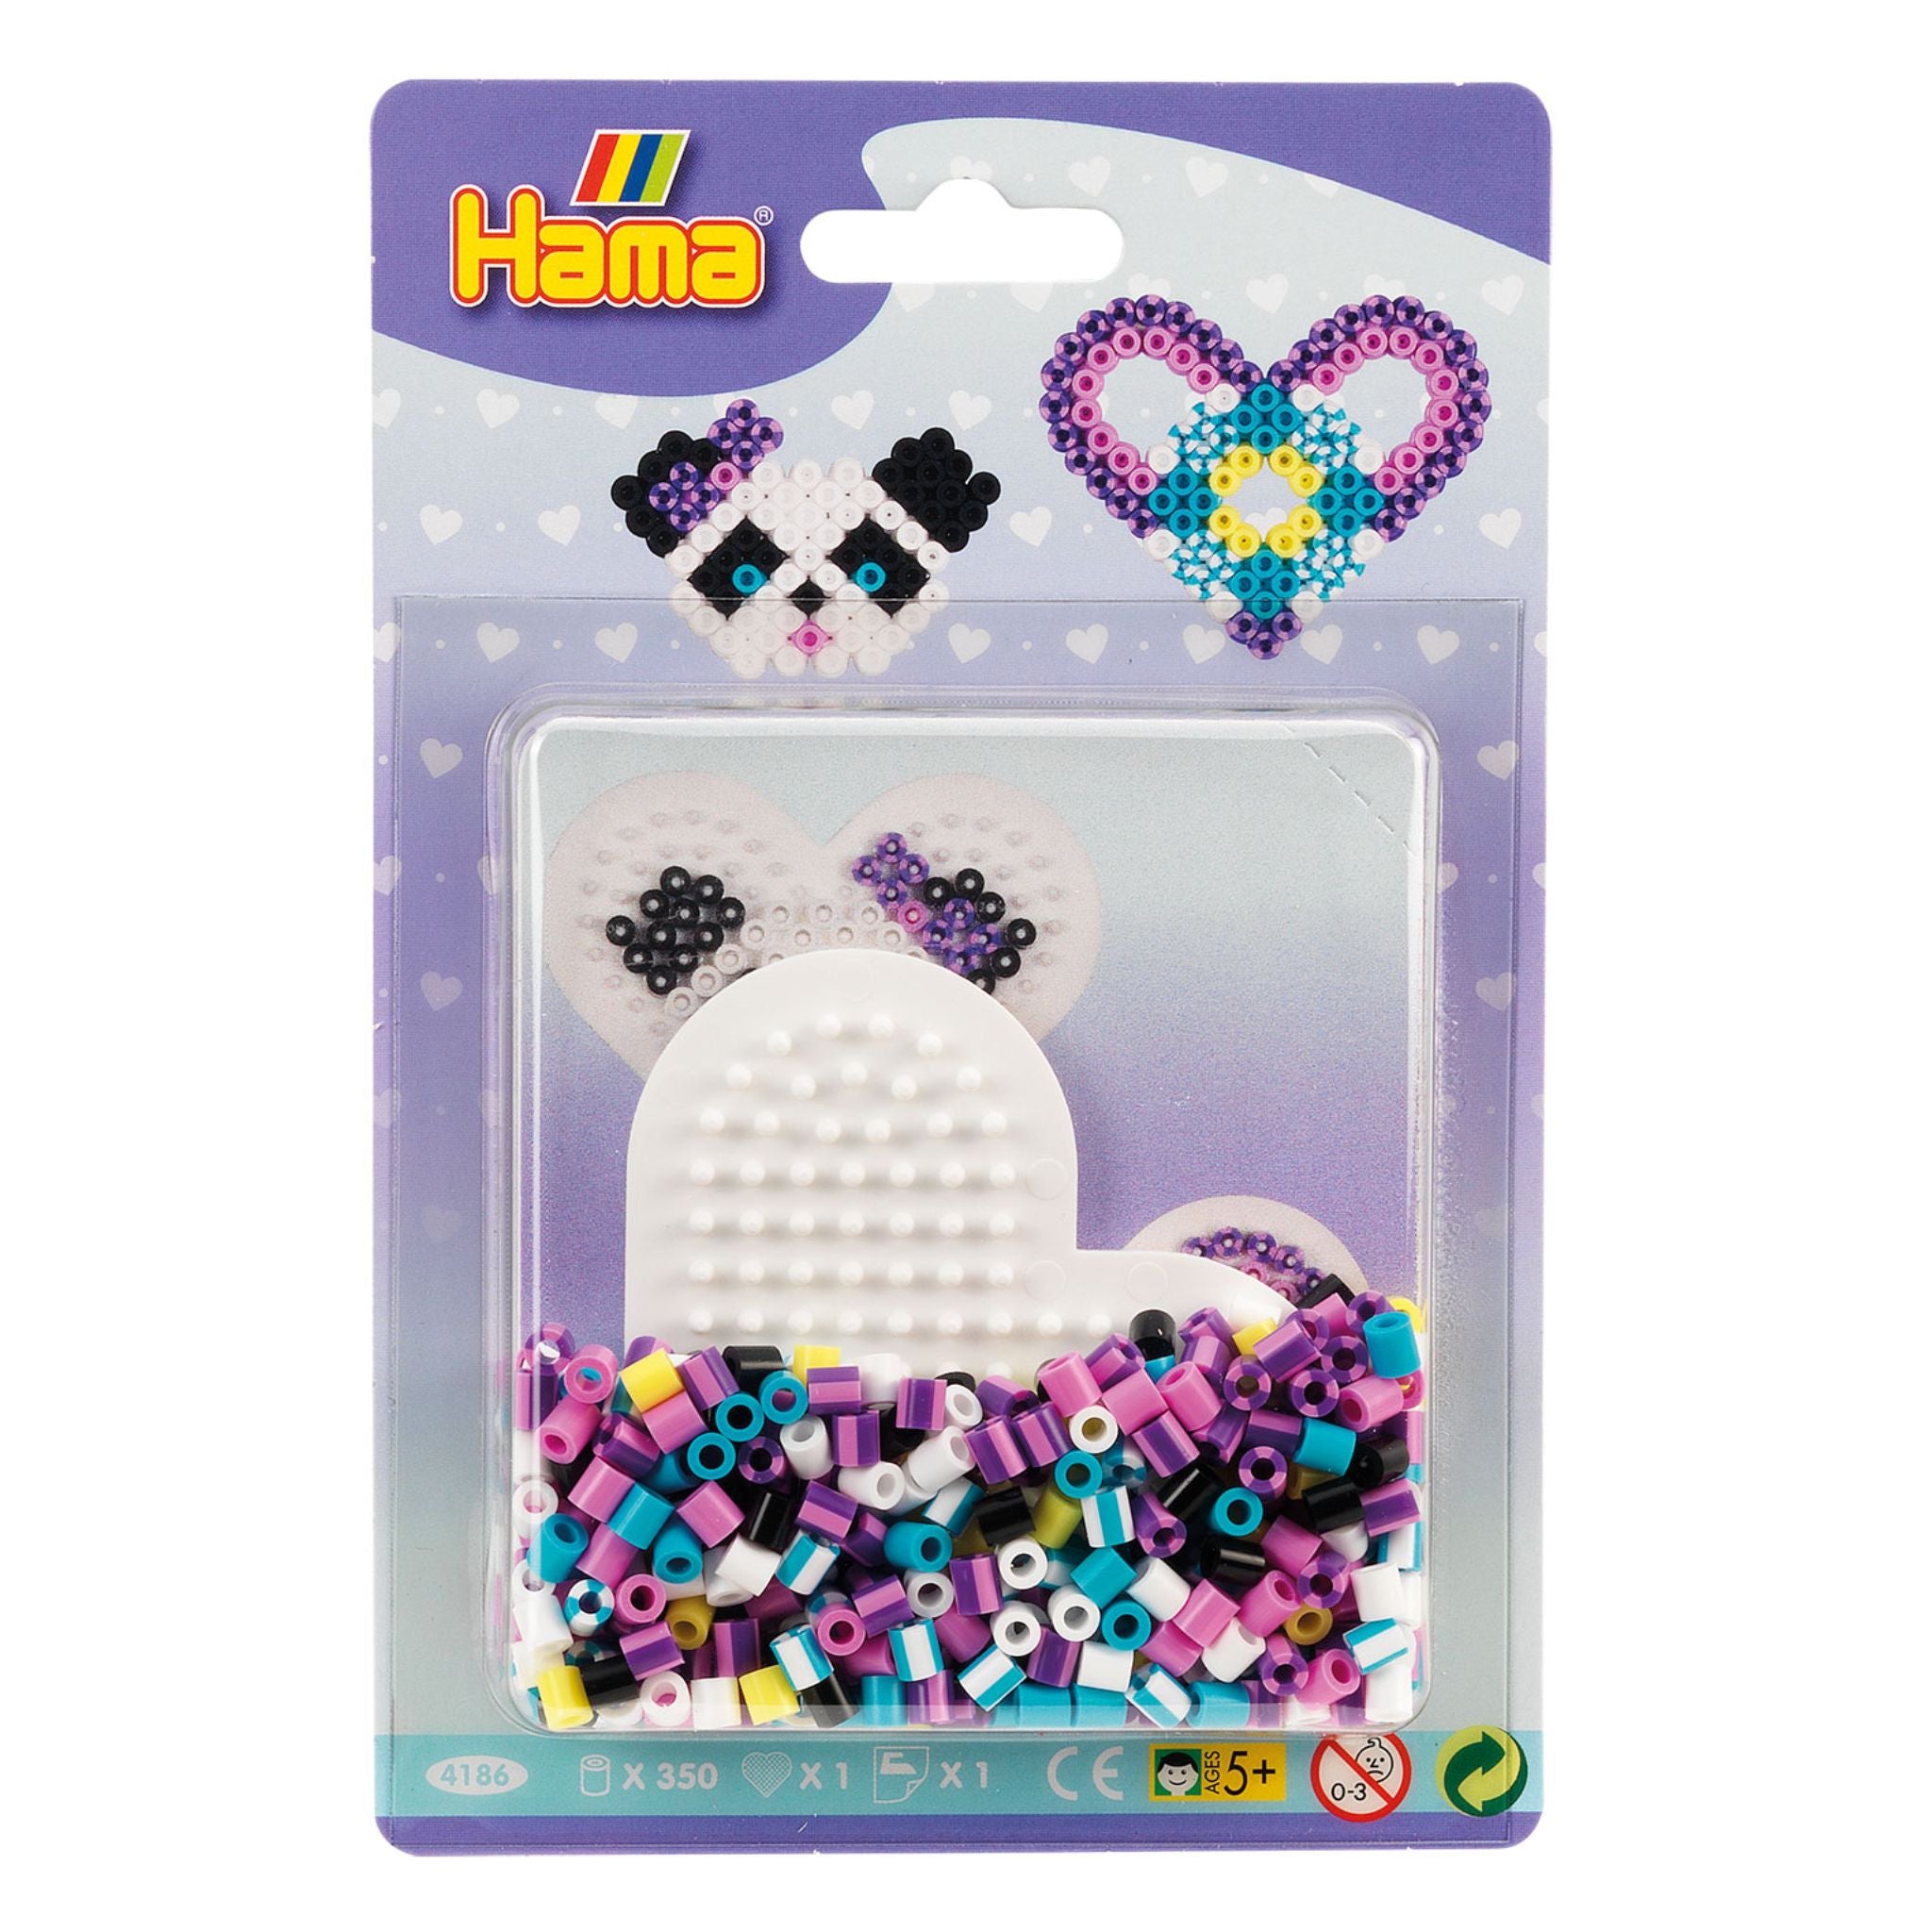 Hama Beads Tub 4000 Pack